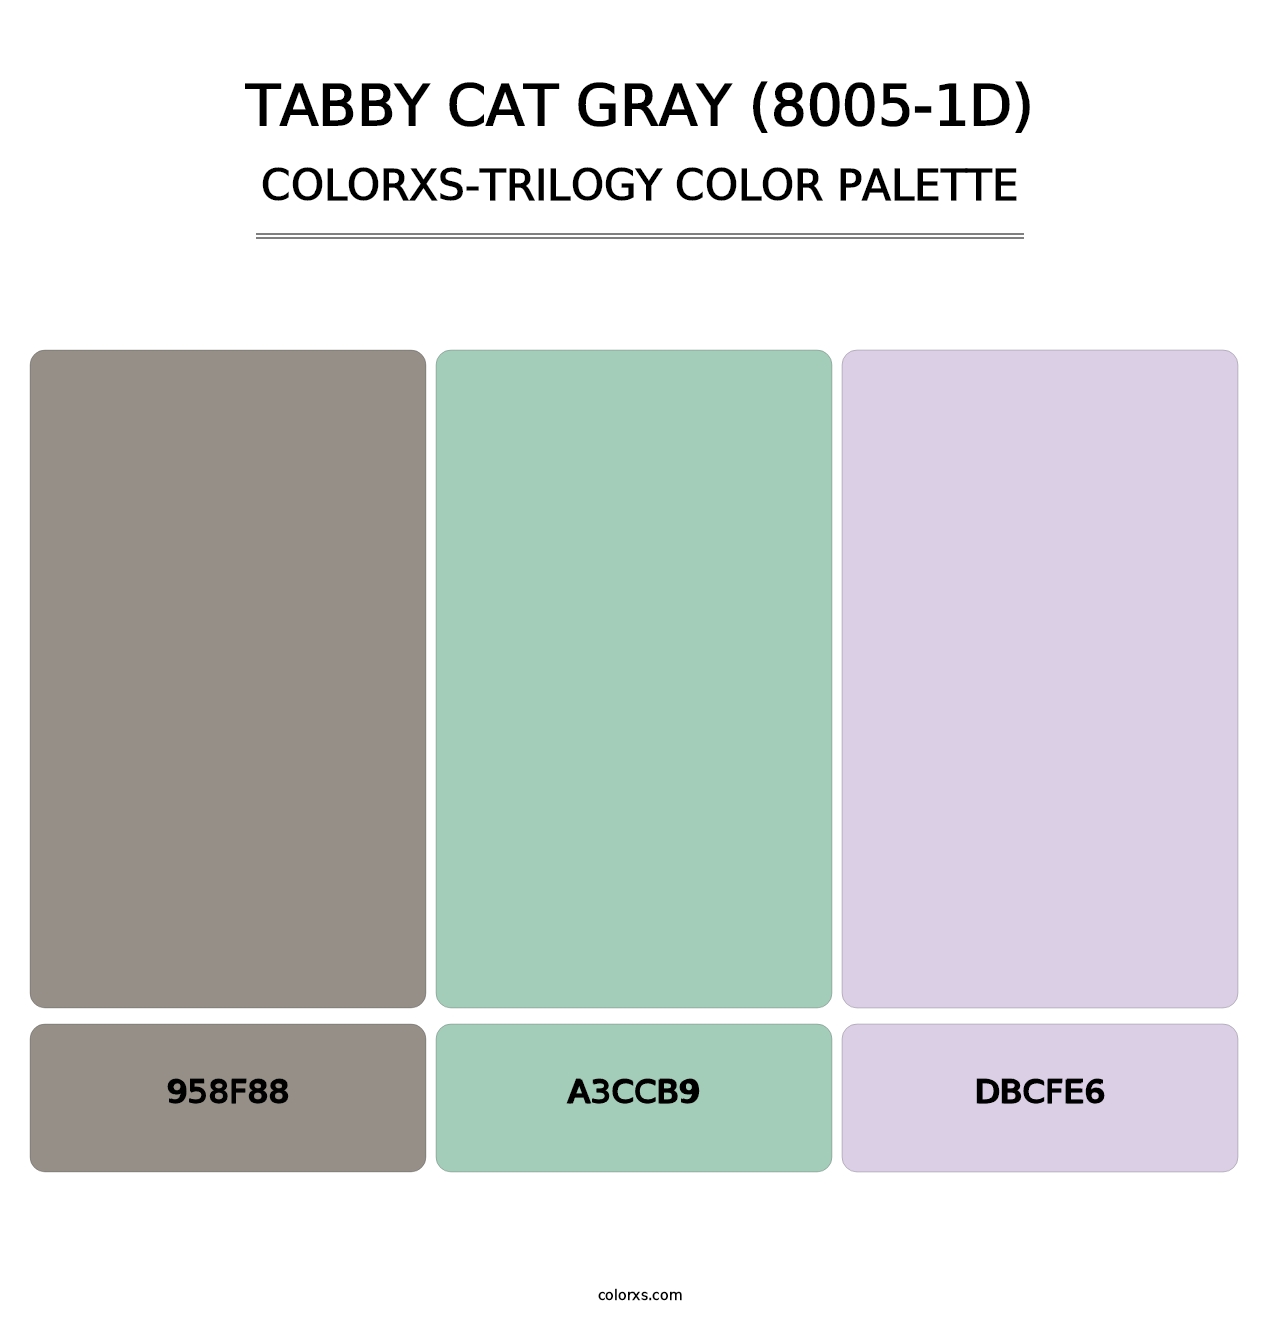 Tabby Cat Gray (8005-1D) - Colorxs Trilogy Palette